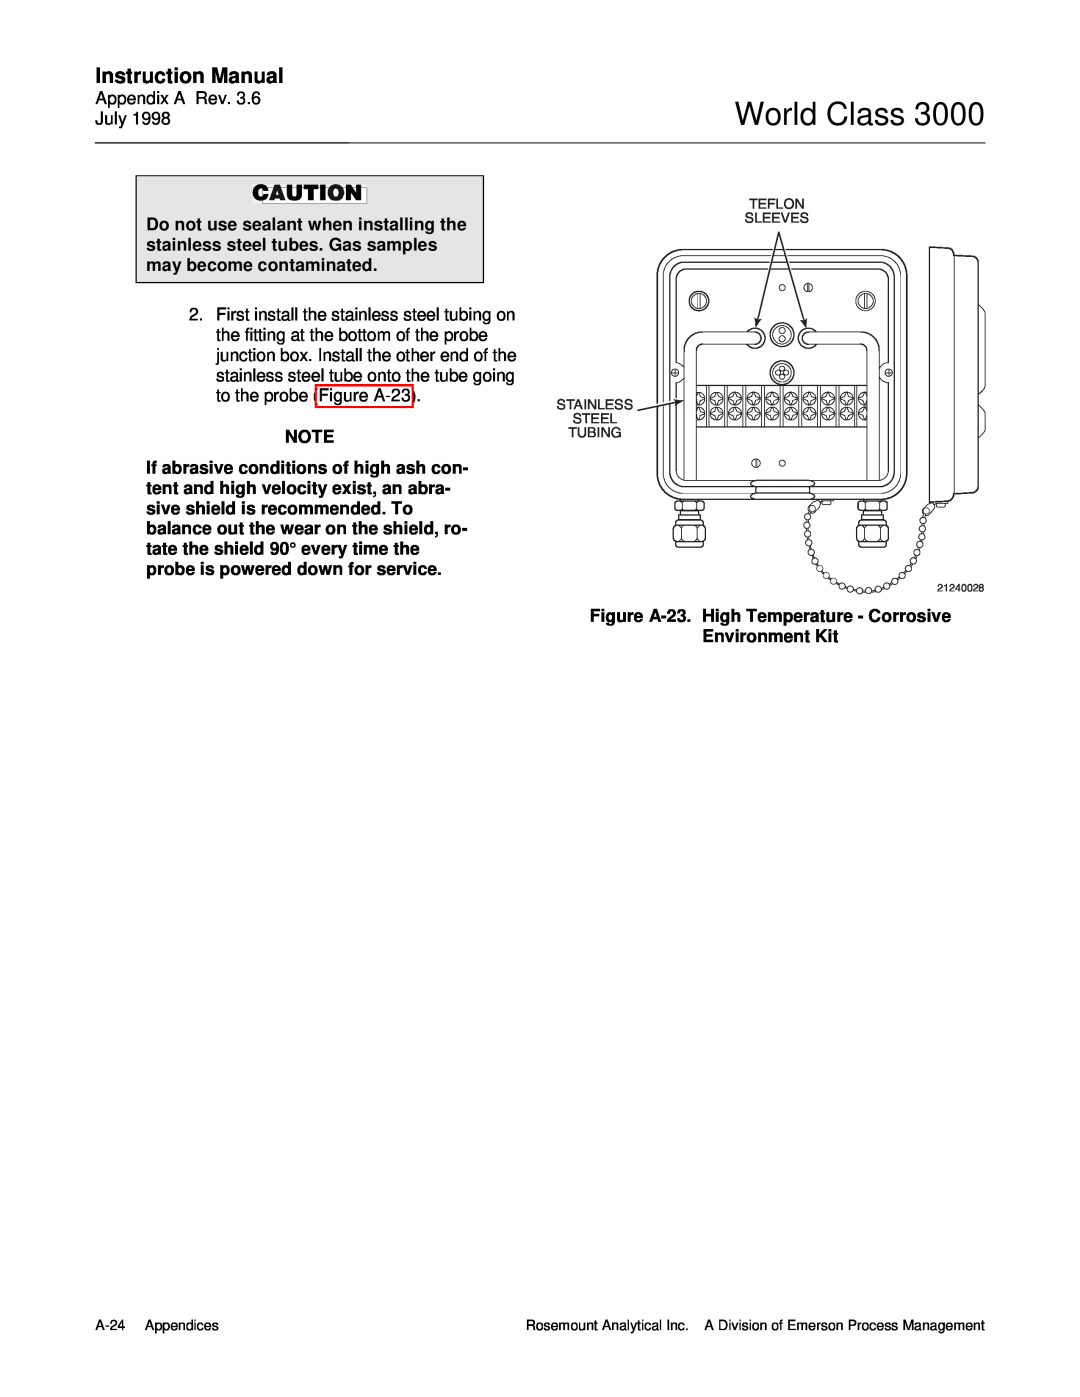 Emerson 3000 manual World Class, Figure A-23.High Temperature - Corrosive, Environment Kit 